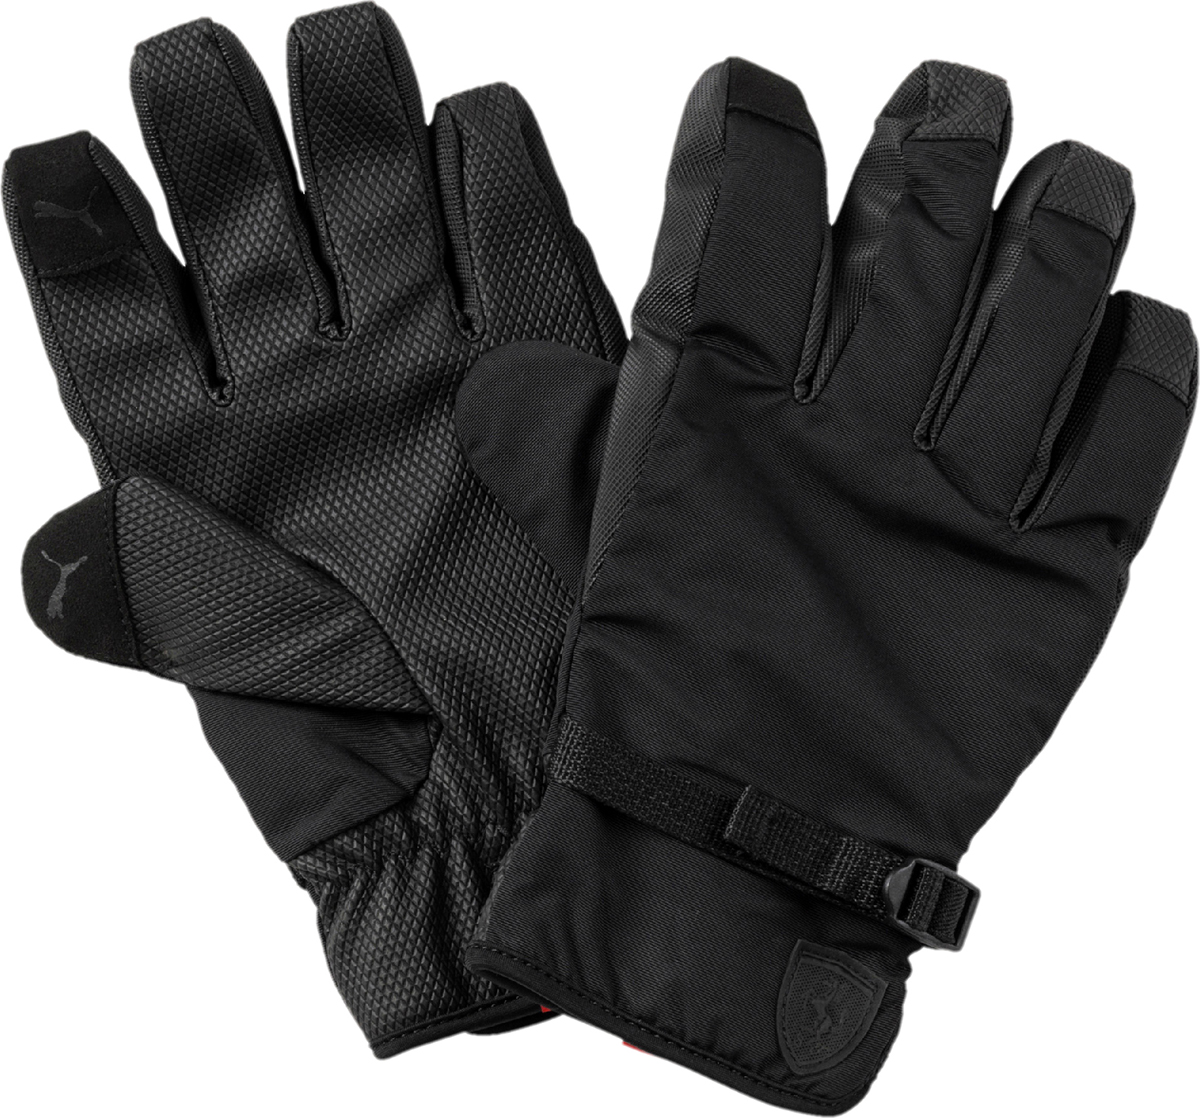 Перчатки Puma Sf Ls Gloves, цвет: черный. 04146801. Размер L/XL (8,5)